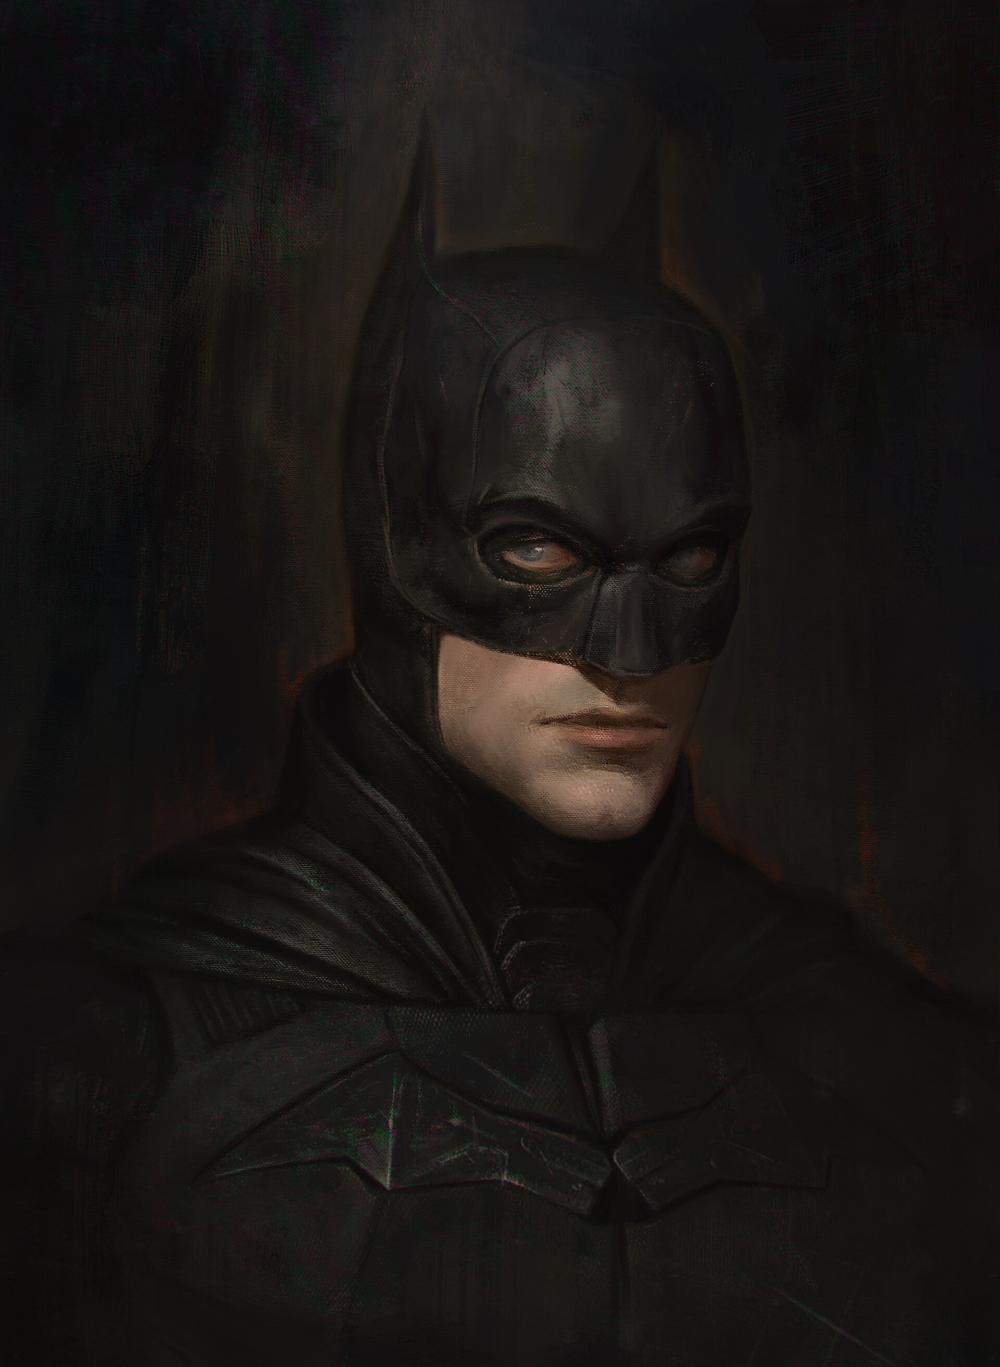 Batman And Catwoman Wallpaper HD